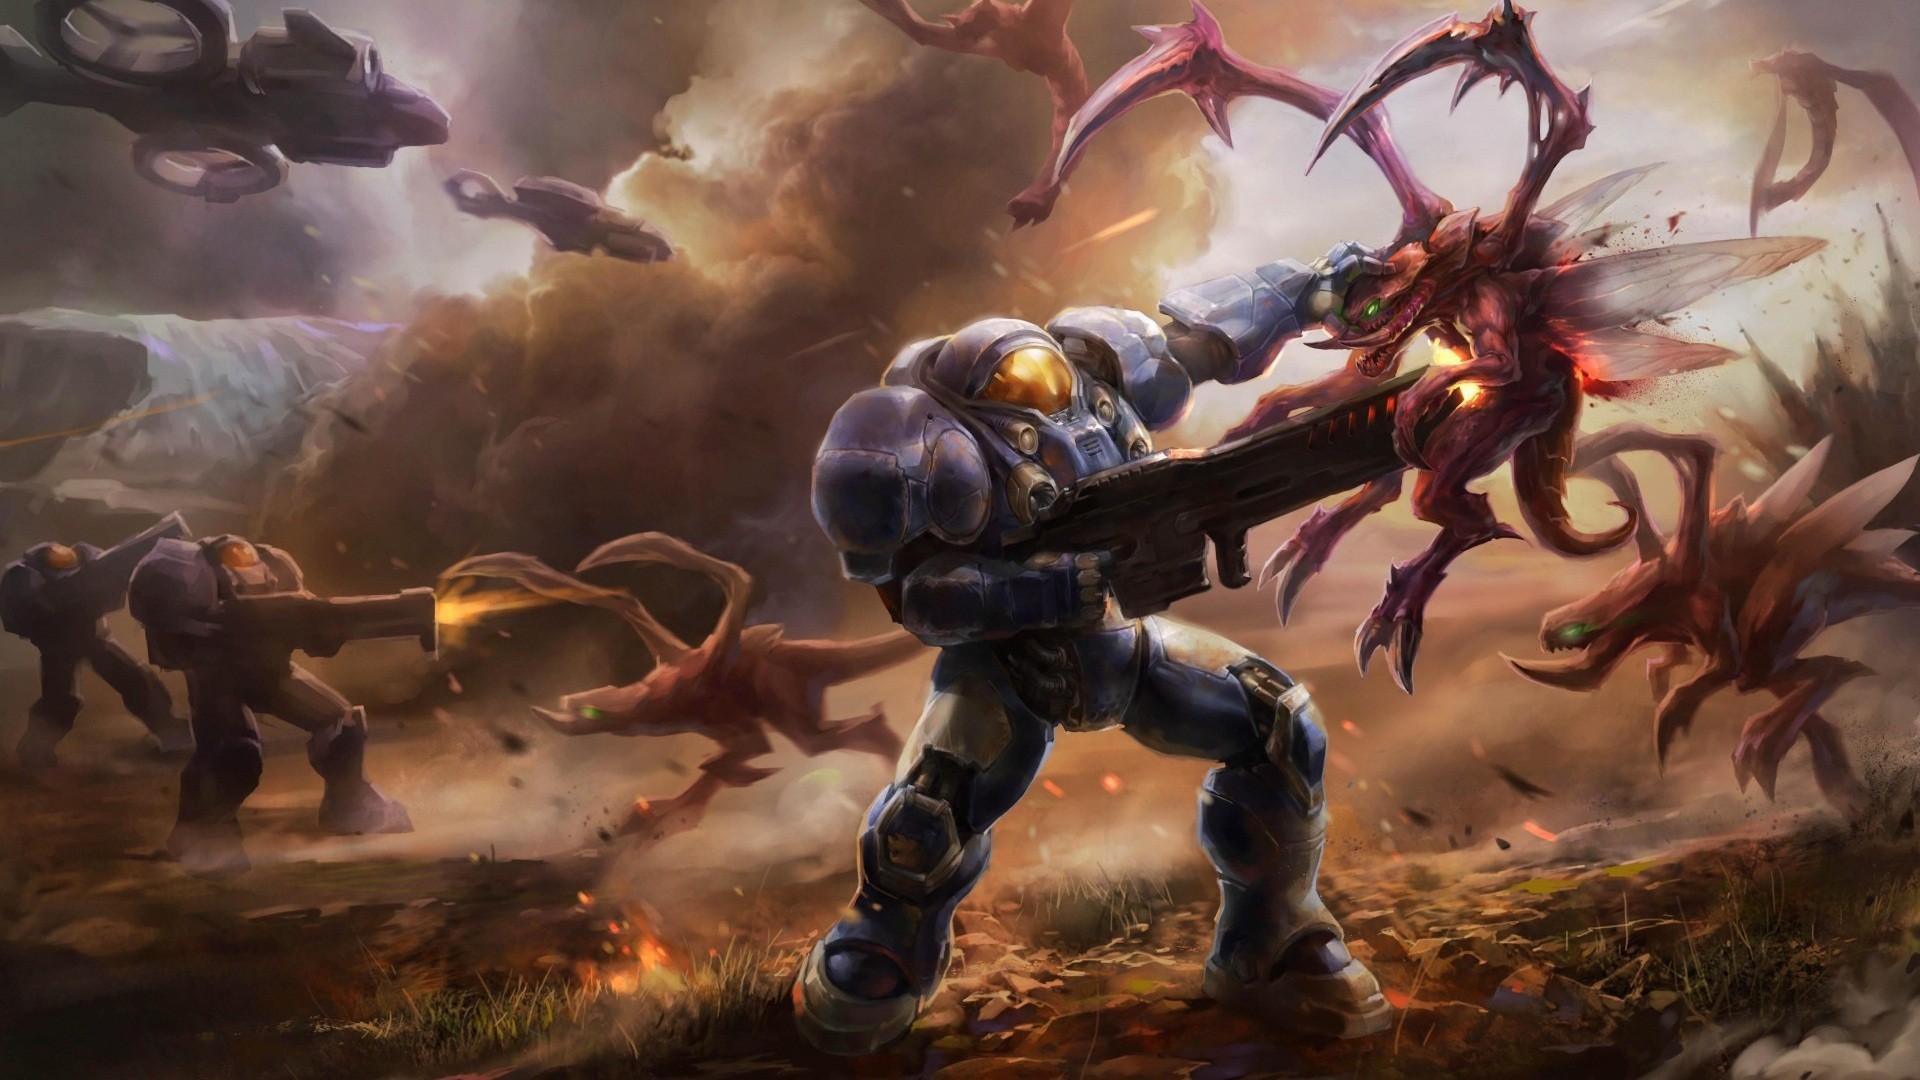 General 1920x1080 Starcraft II Blizzard Entertainment PC gaming battle video game art Zerg